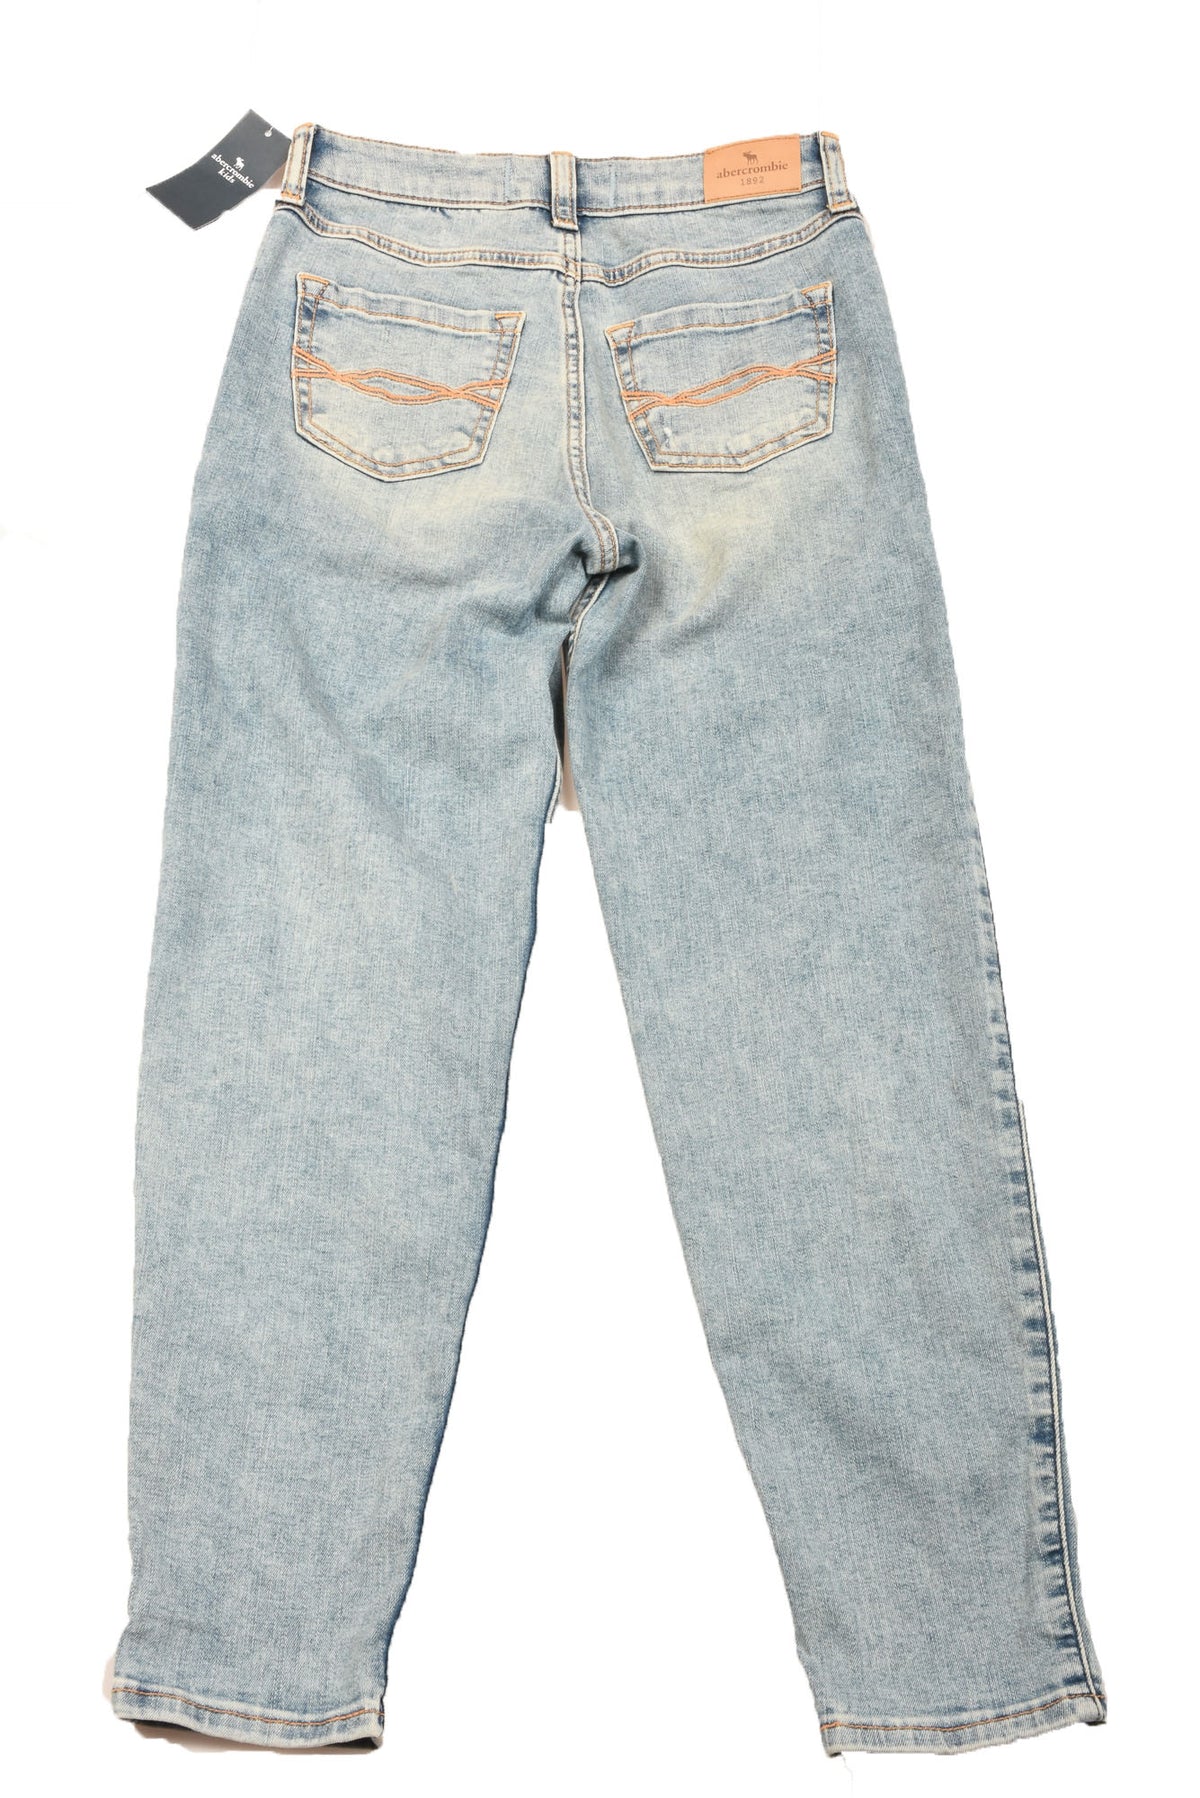 Abercrombie Kids Size 11/12 Slim Girl&#39;s Jeans